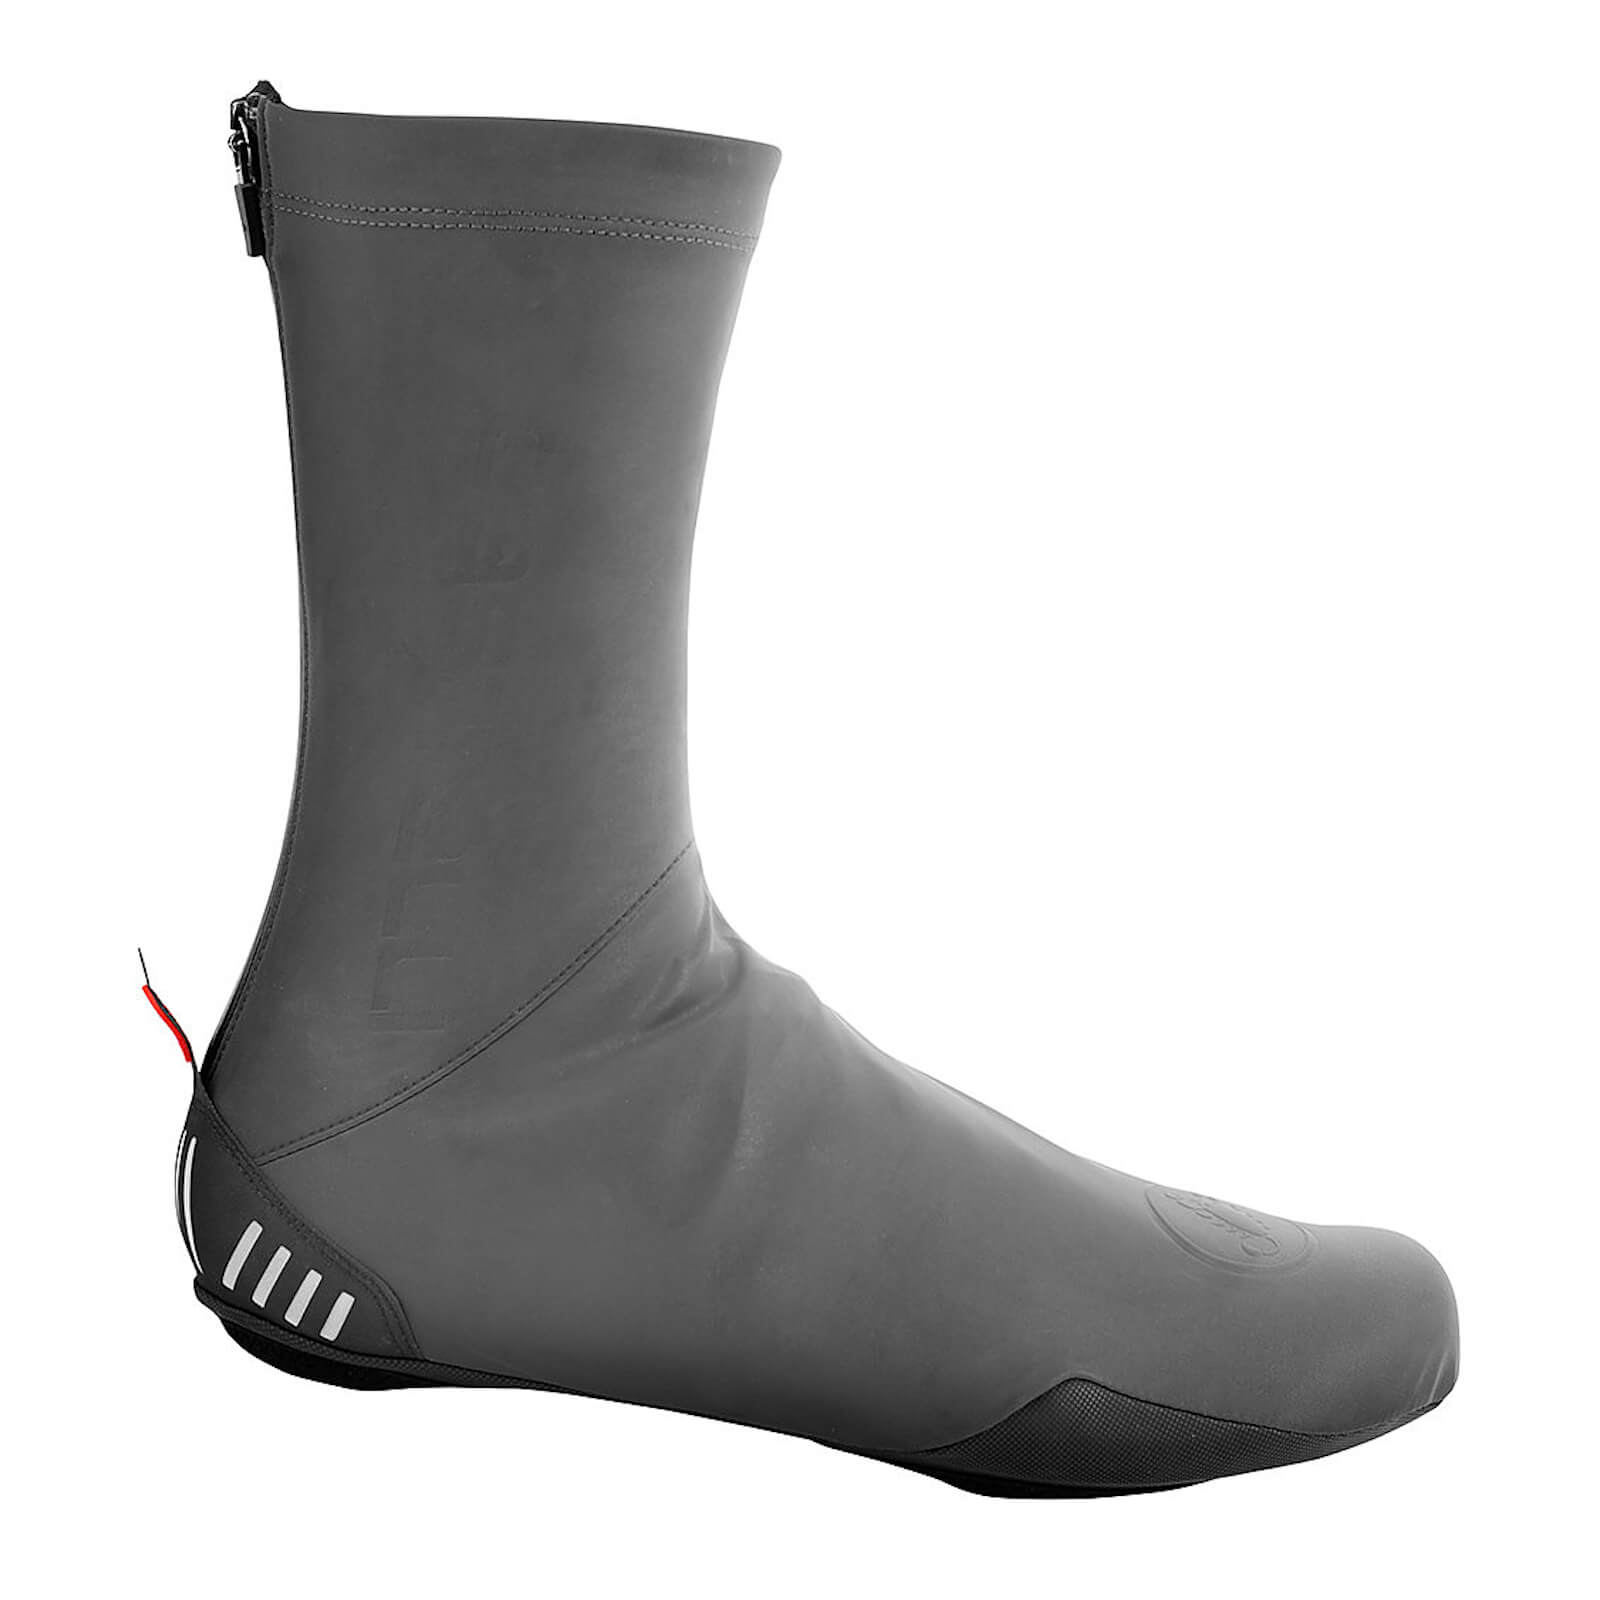 Castelli Reflex Shoe Covers - AW19 - Black / Silver Reflex / Small